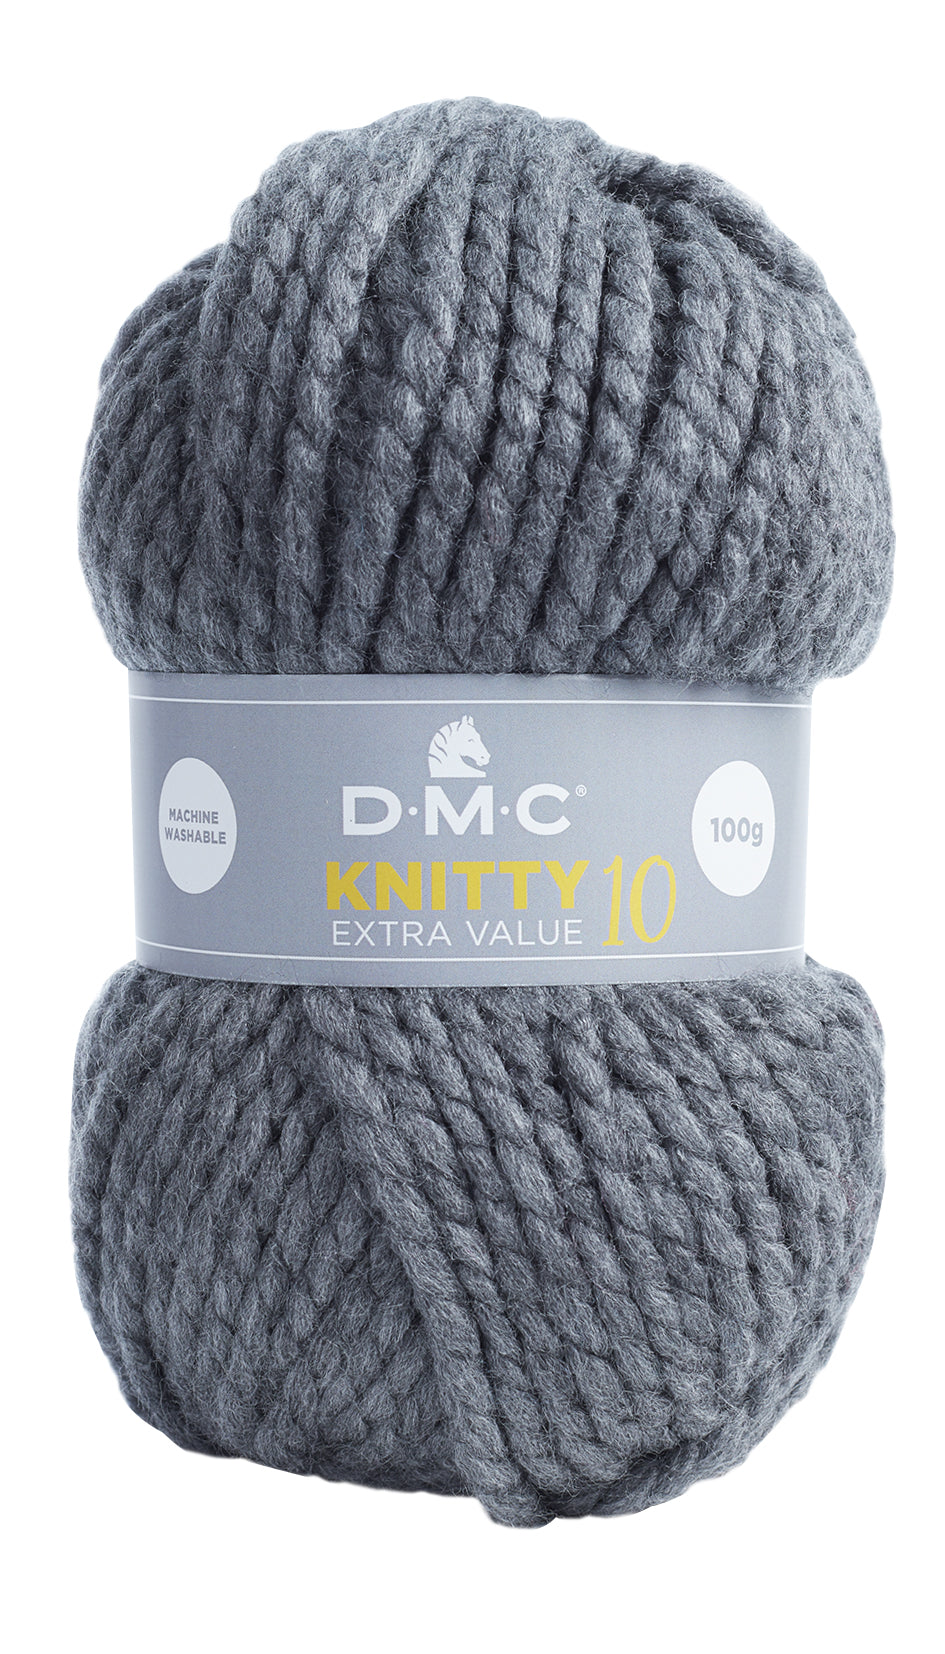 Lana Dmc Knitty 10 Colore 790